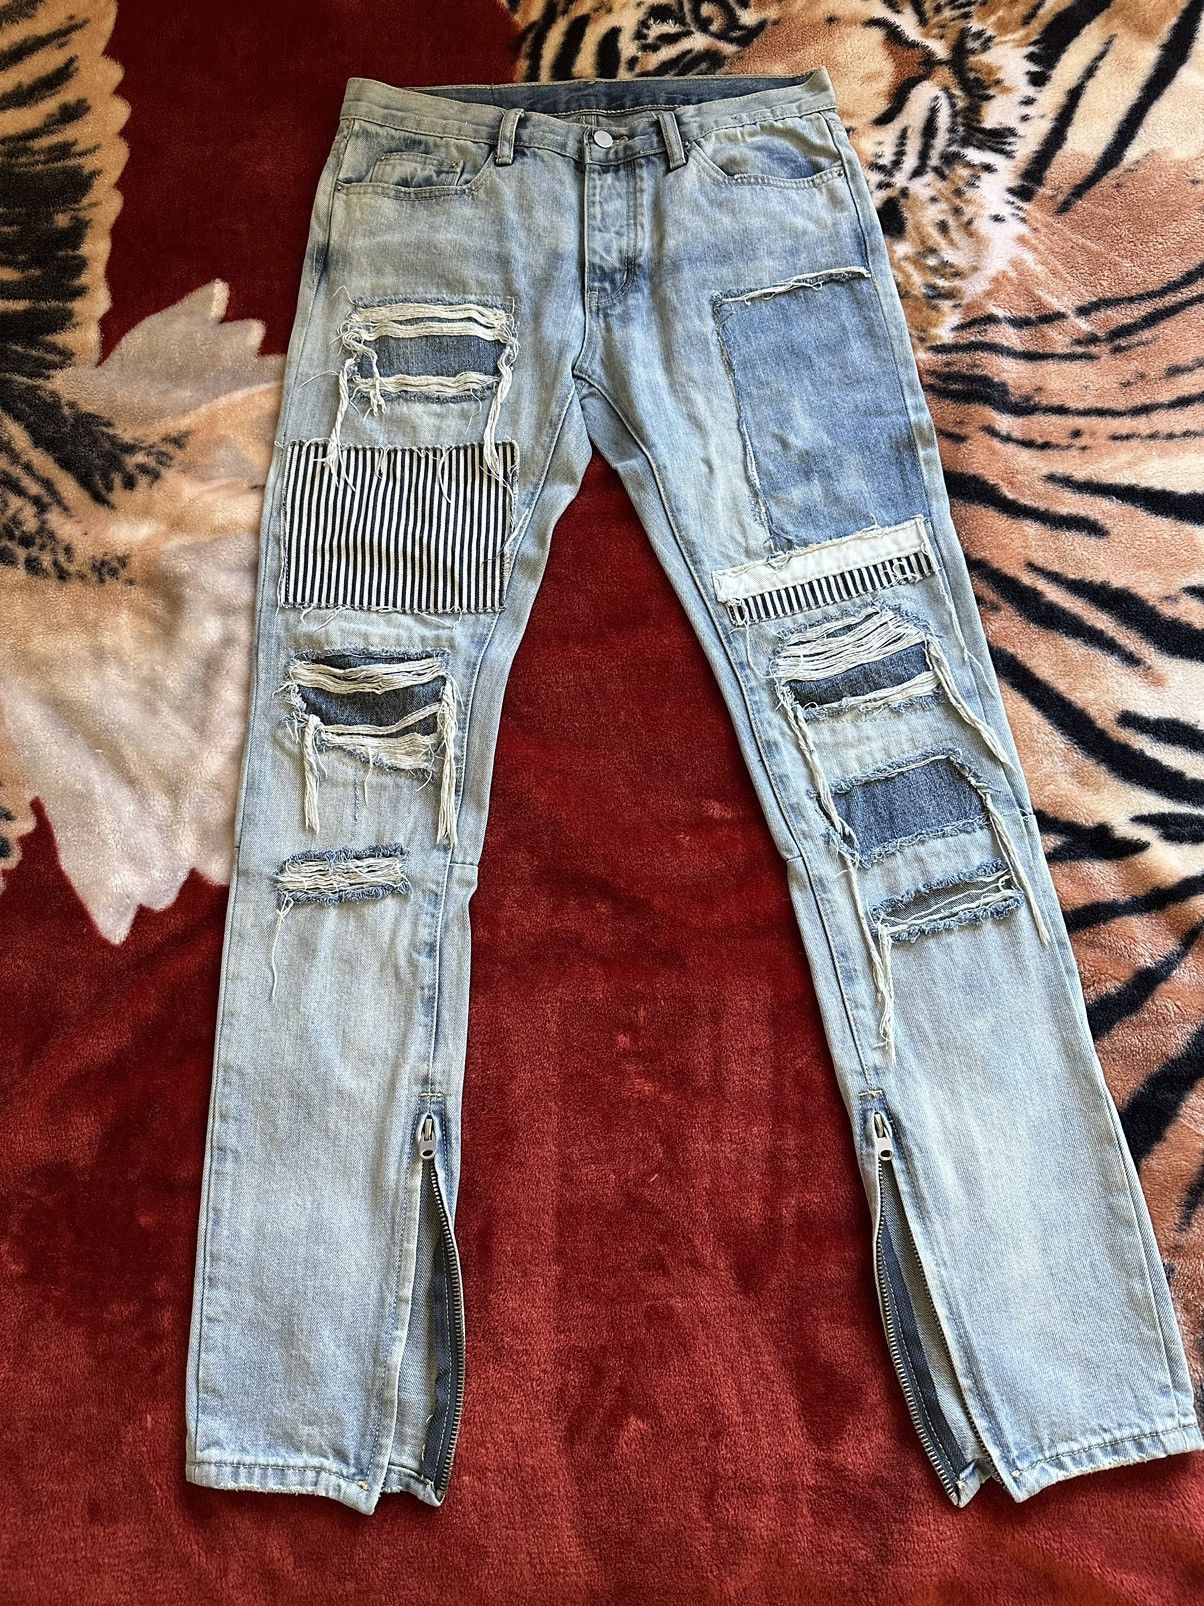 MNML MNML Denim Patch Jeans | Grailed